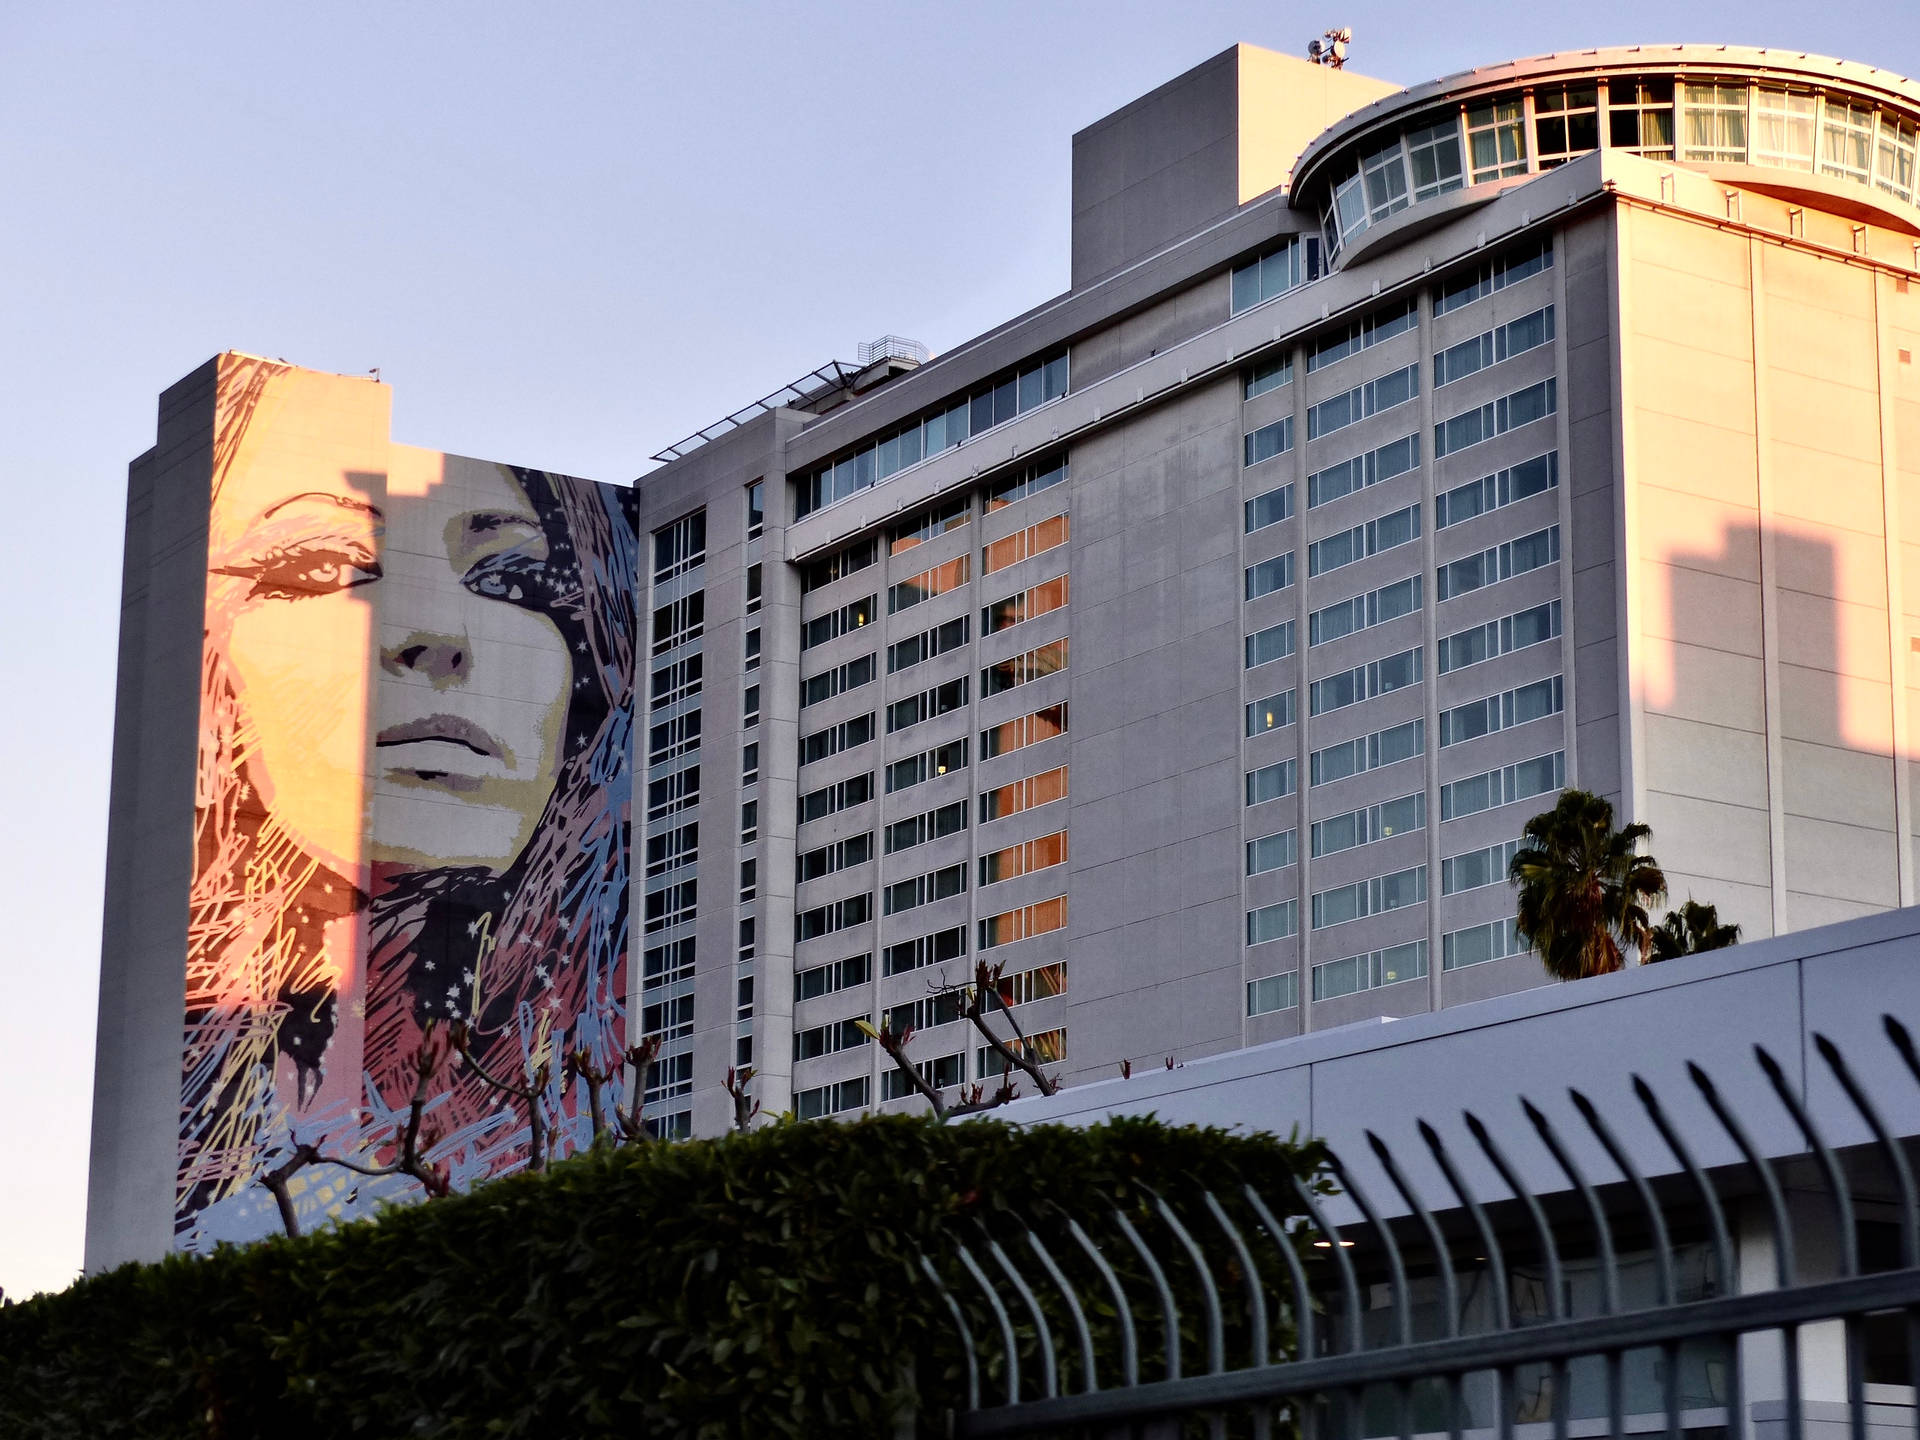 Hollywood Street Building Mural Wallpaper